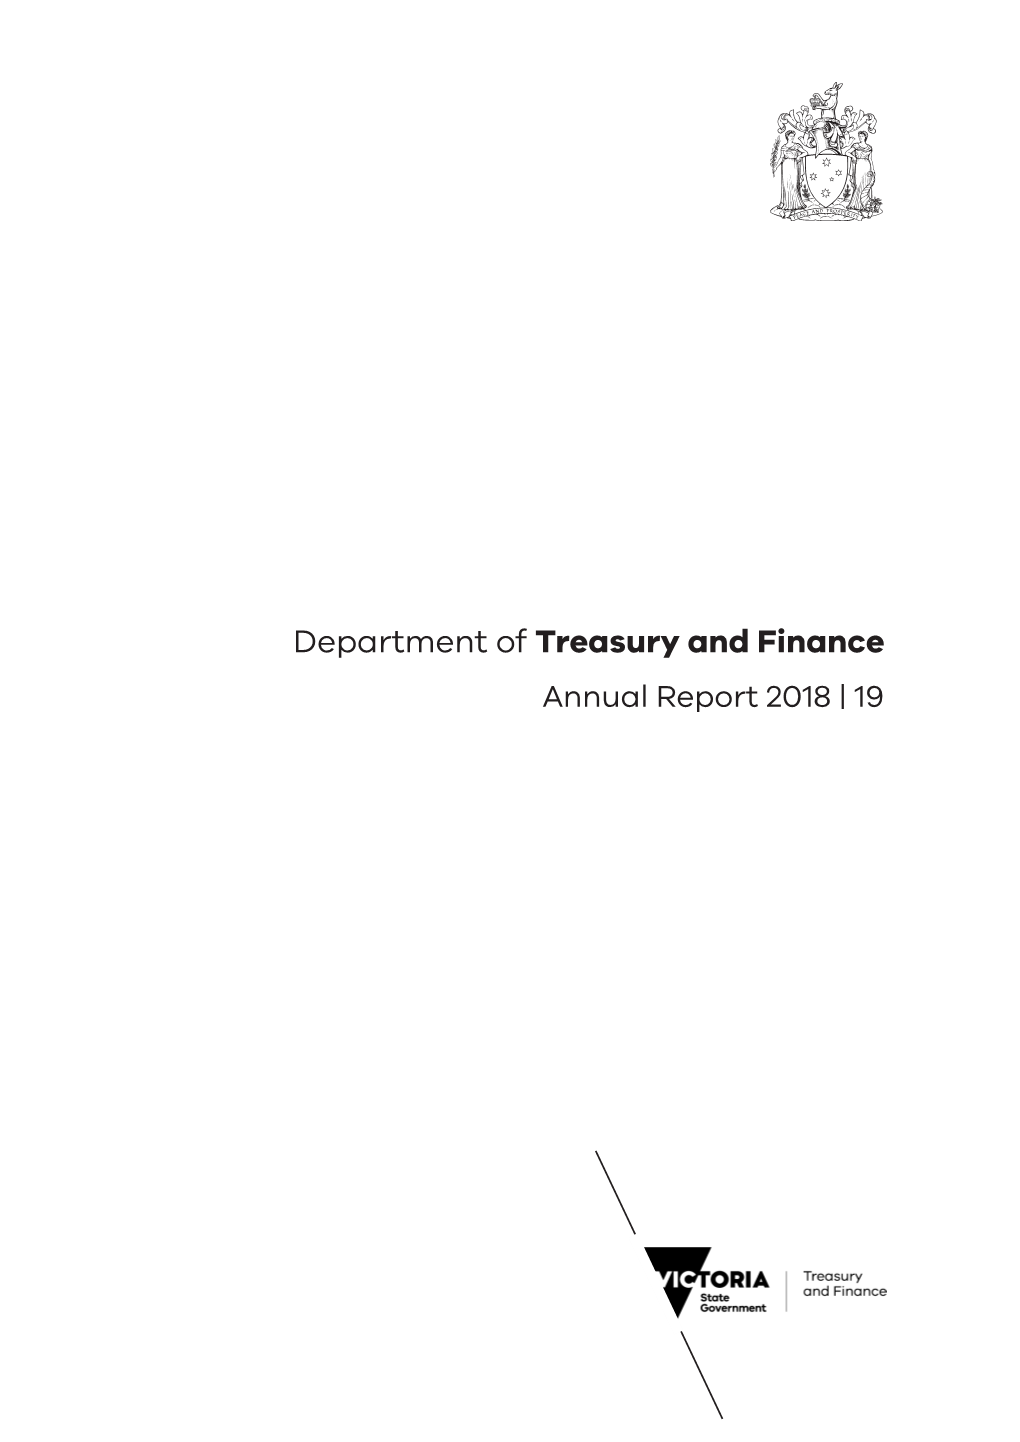 Department of Treasury and Finance Annual Report 2018 | 19 the Secretary Department of Treasury and Finance 1 Treasury Place Melbourne Victoria 3002 Australia